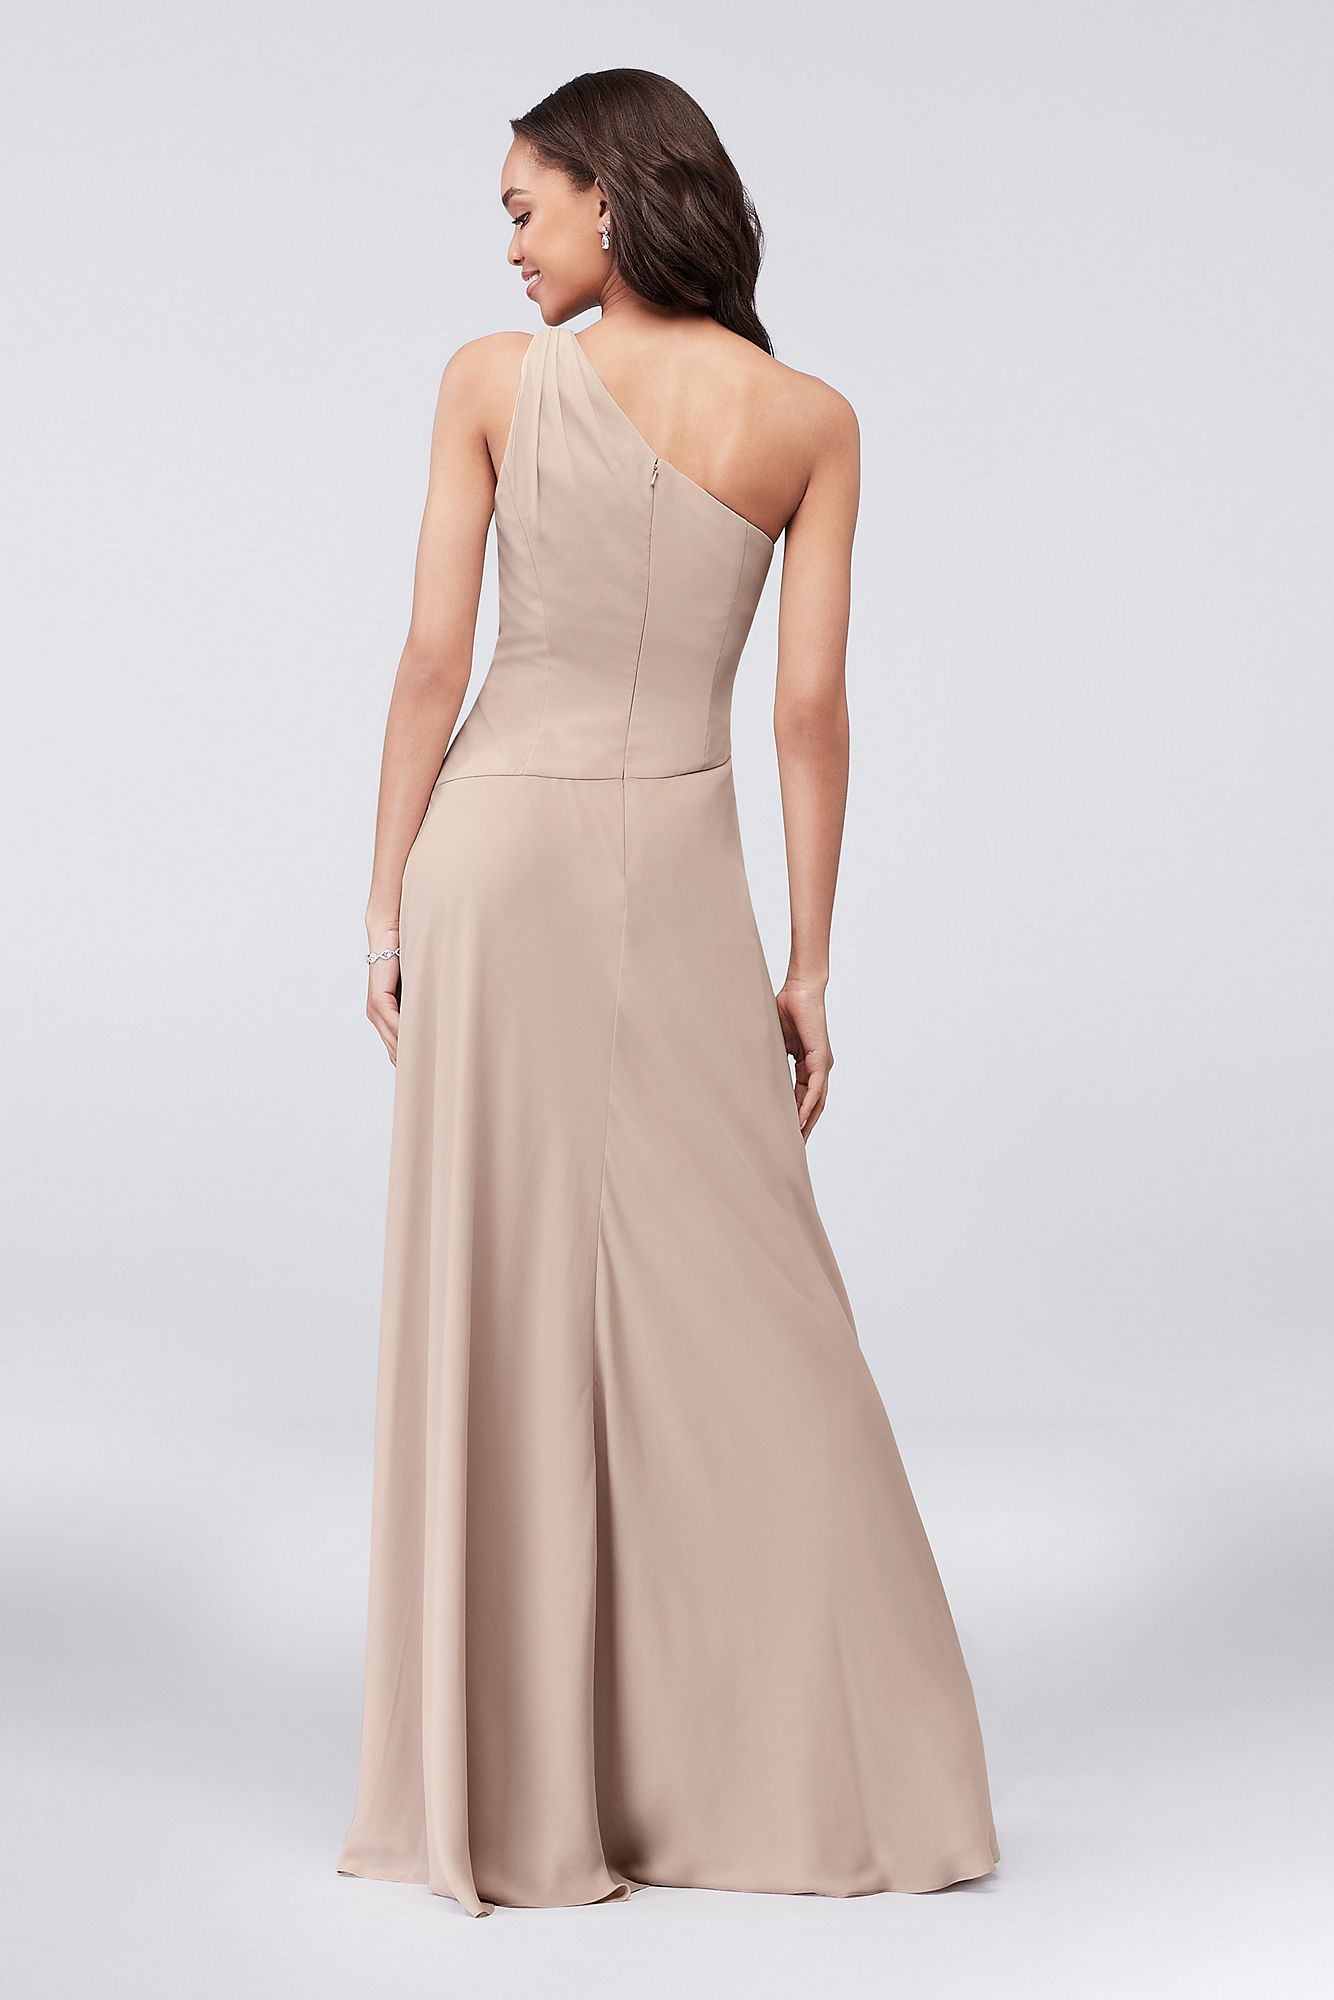 New One-Shoulder Cascade 4XLF19832 Bridesmaid Dress